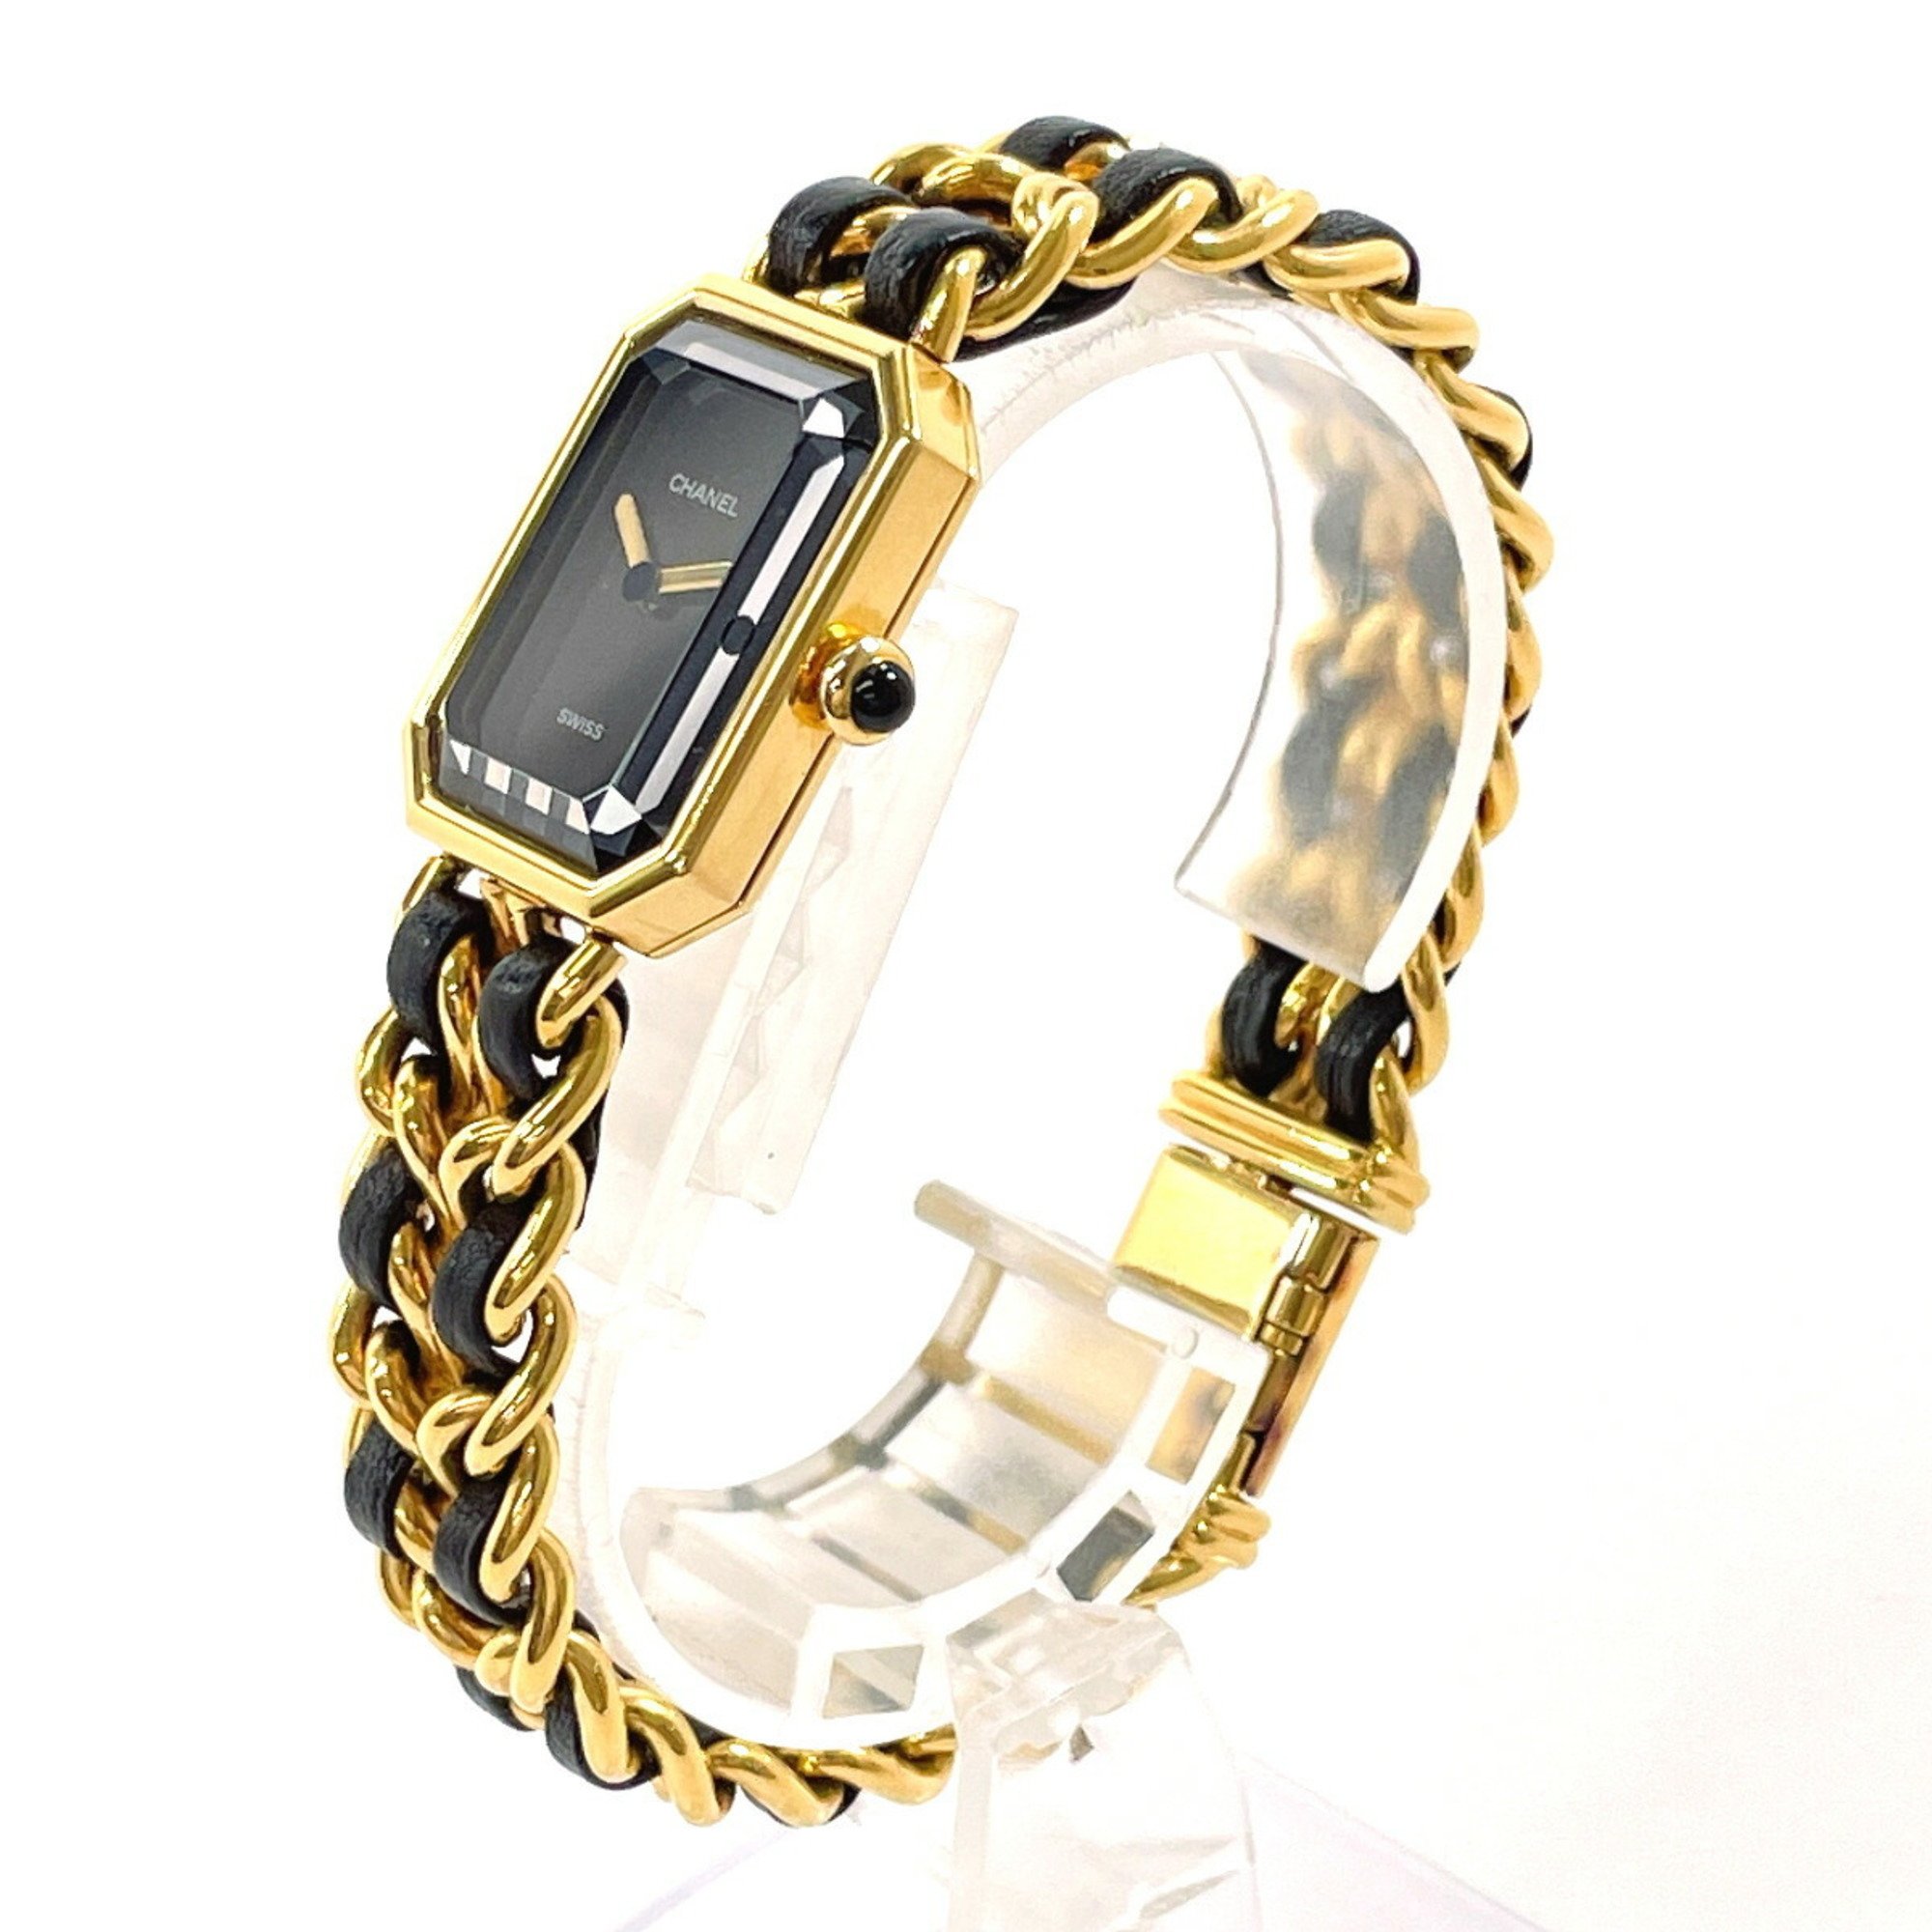 CHANEL Premiere XL H0001 Watch GP Leather Gold Quartz Black Dial Women's N3113032